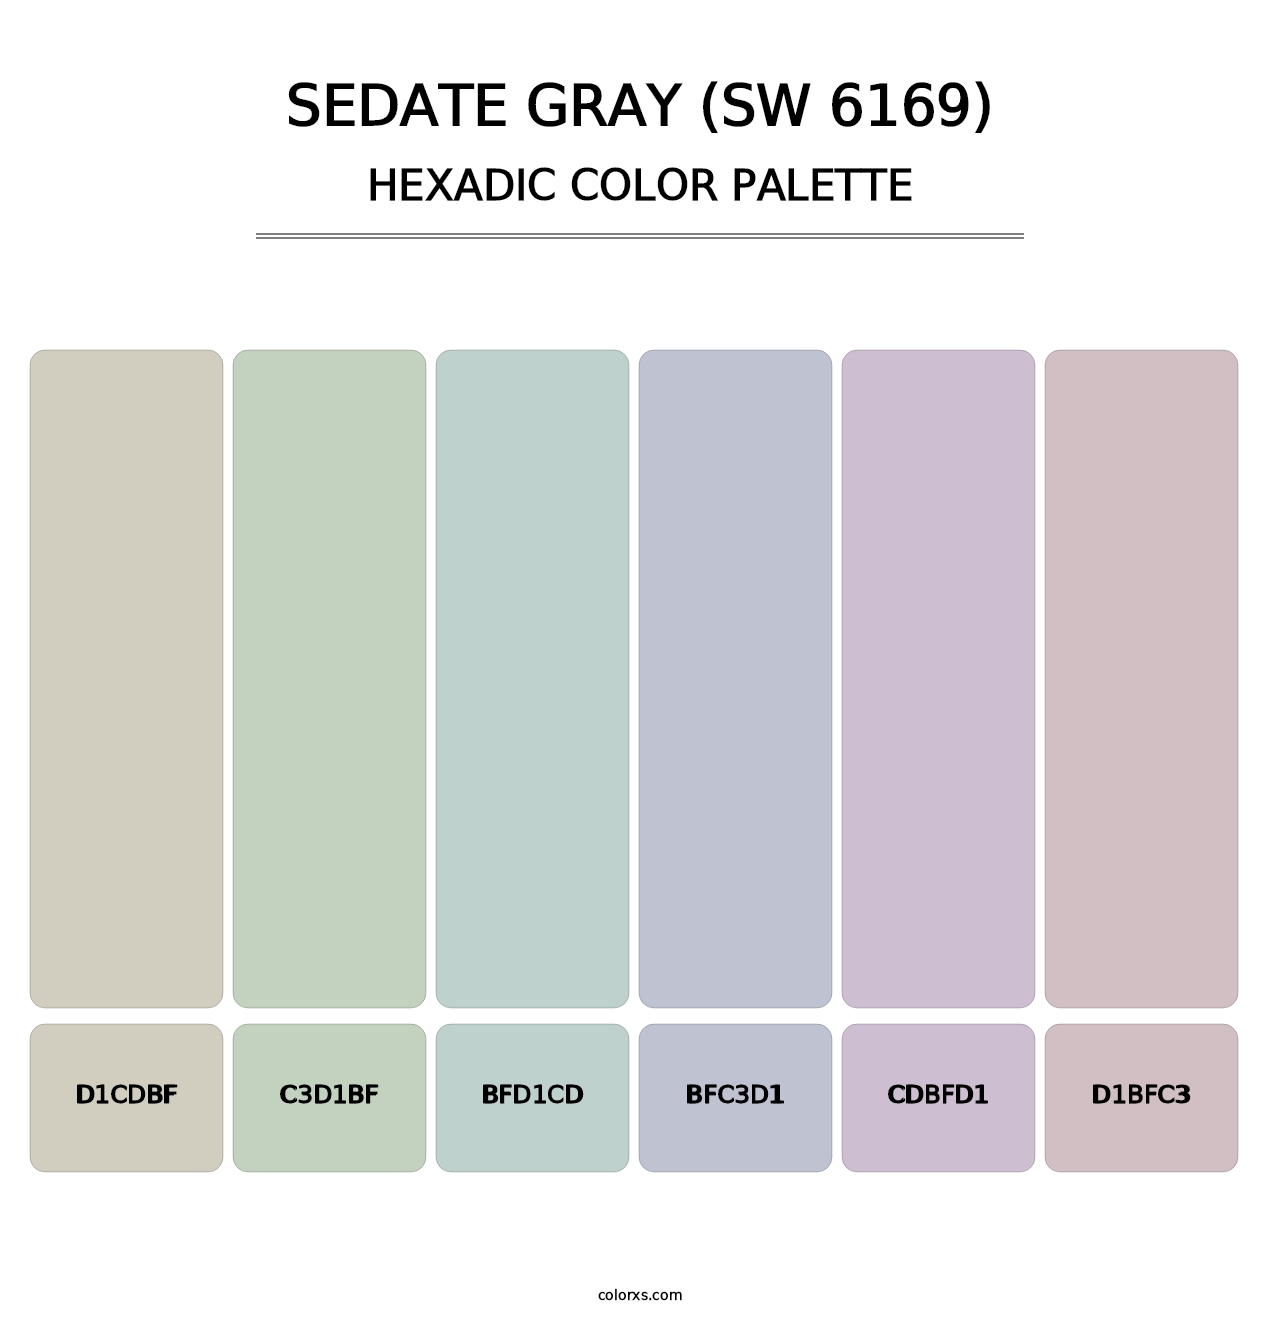 Sedate Gray (SW 6169) - Hexadic Color Palette